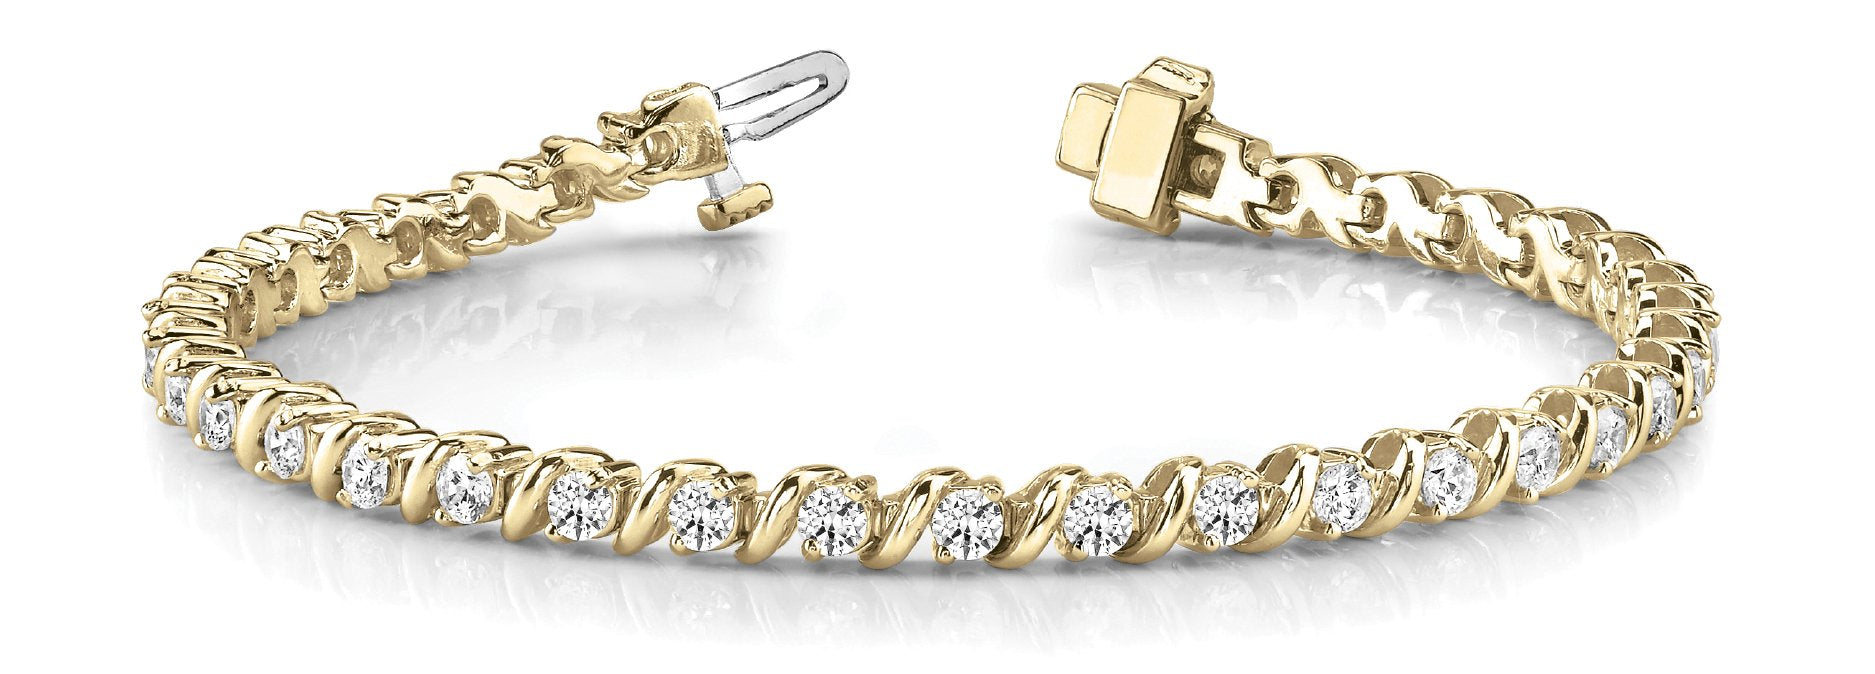 Fancy Diamond Bracelet Ladies 5.56ct tw - 14kt Yellow Gold